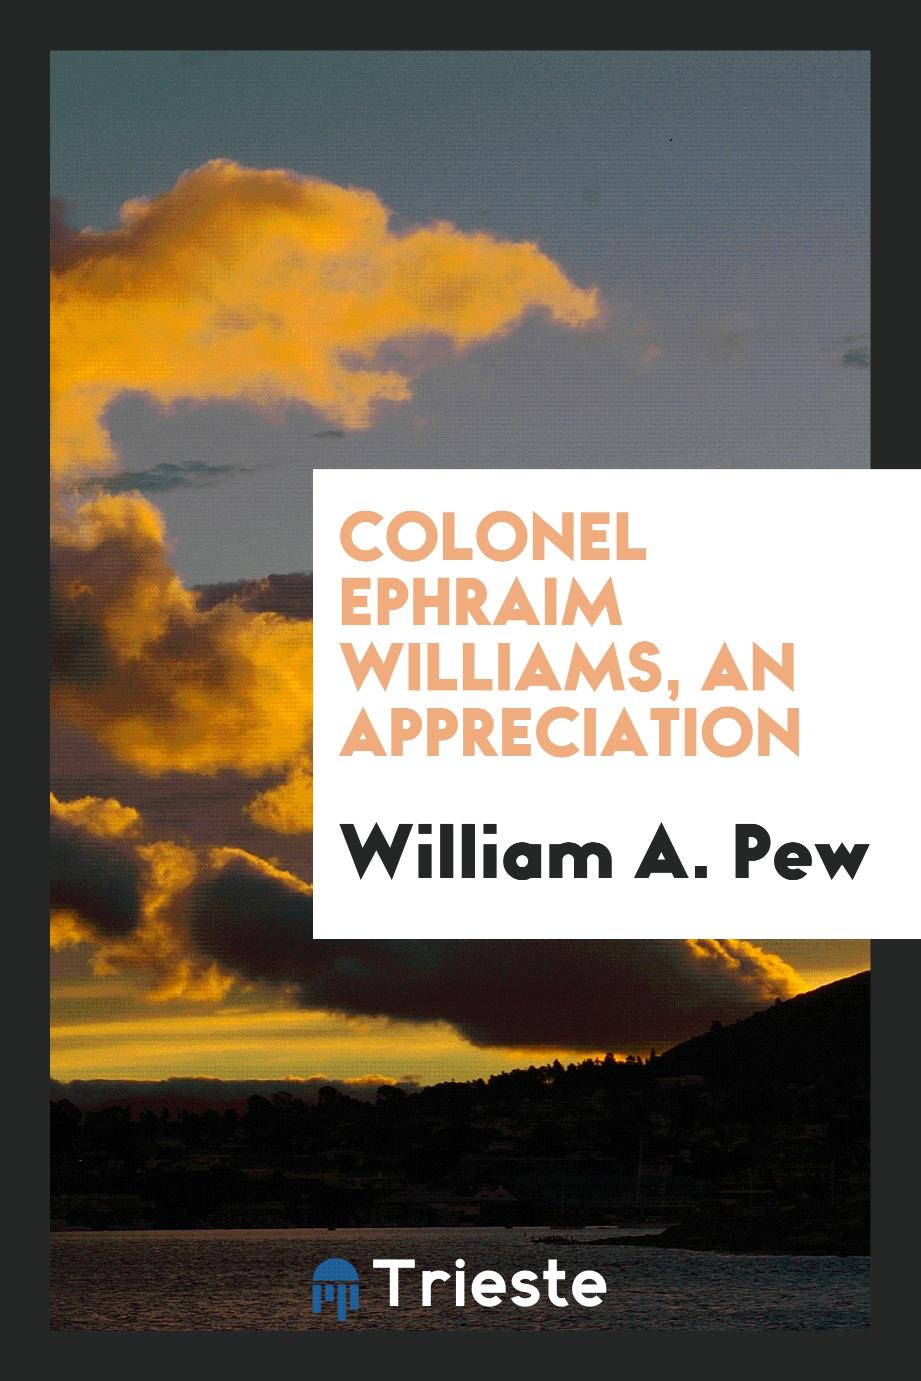 Colonel Ephraim Williams, an appreciation